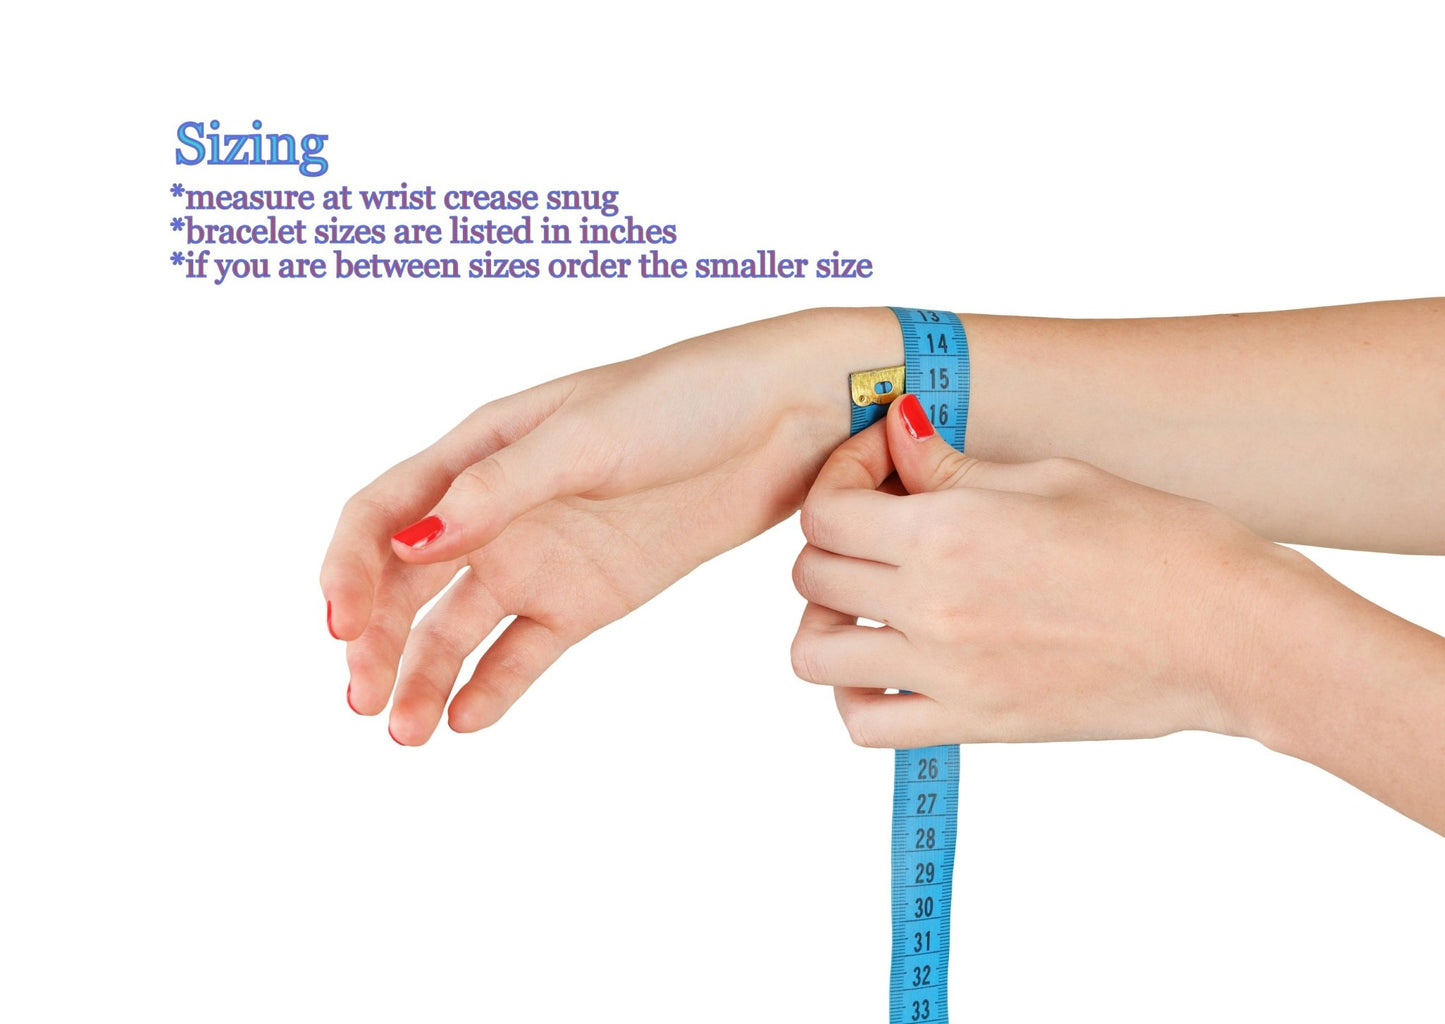 Acupressure Anti Nausea Bracelets-Calming Stress Relief Band-Motion Sickness-Balance-Pair - Acupressure Bracelets